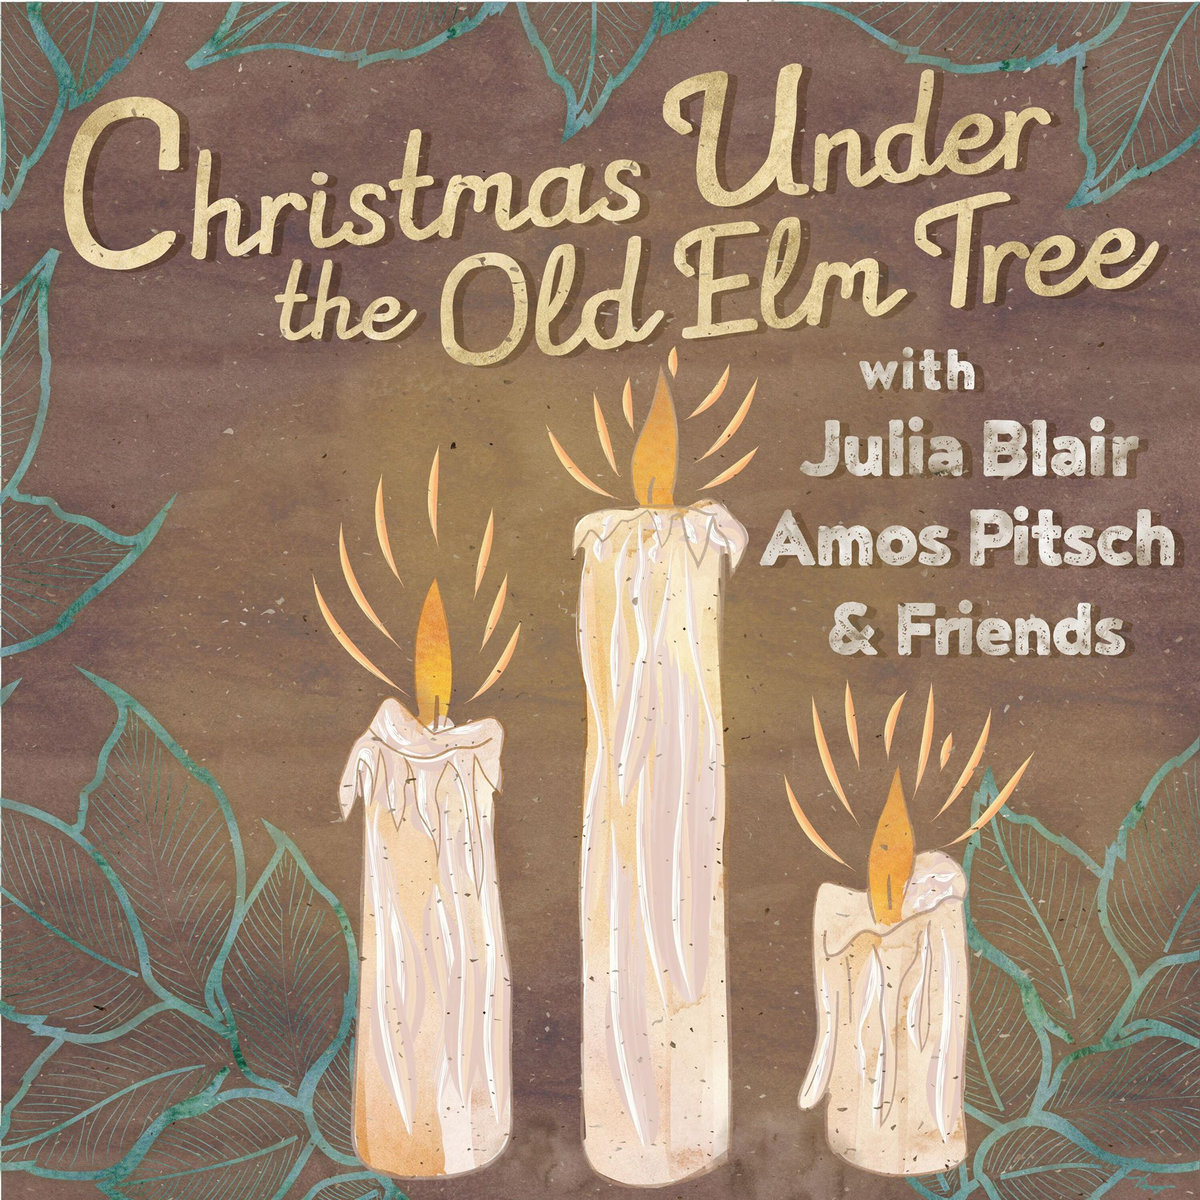 Christmas Under the Old Elm Tree album art